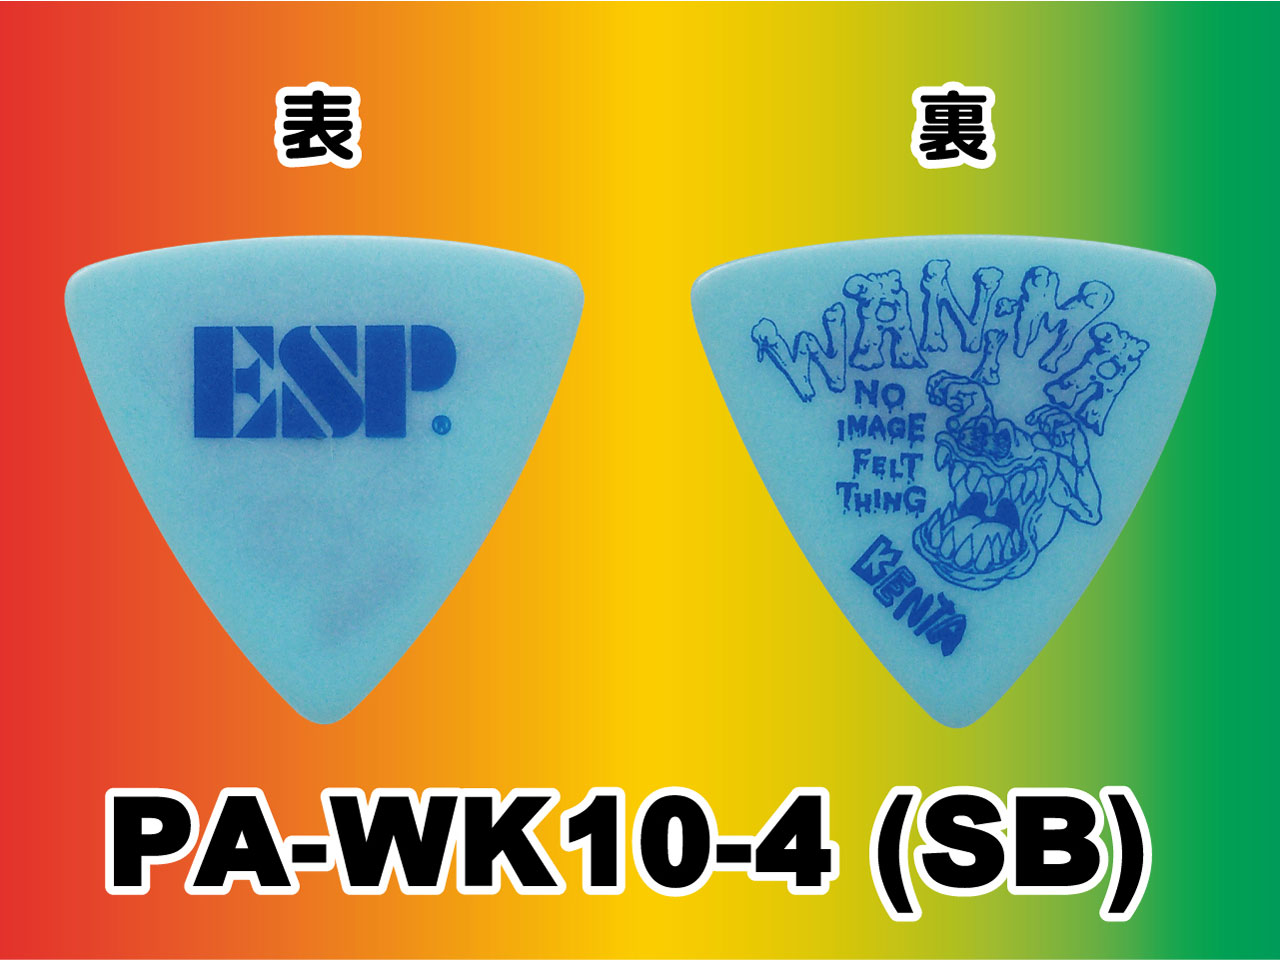 ESP(イーエスピー) Artist Pick Series PA-WK10-4 (WANIMA/KENTA Model)＆”ハメパチ” セット